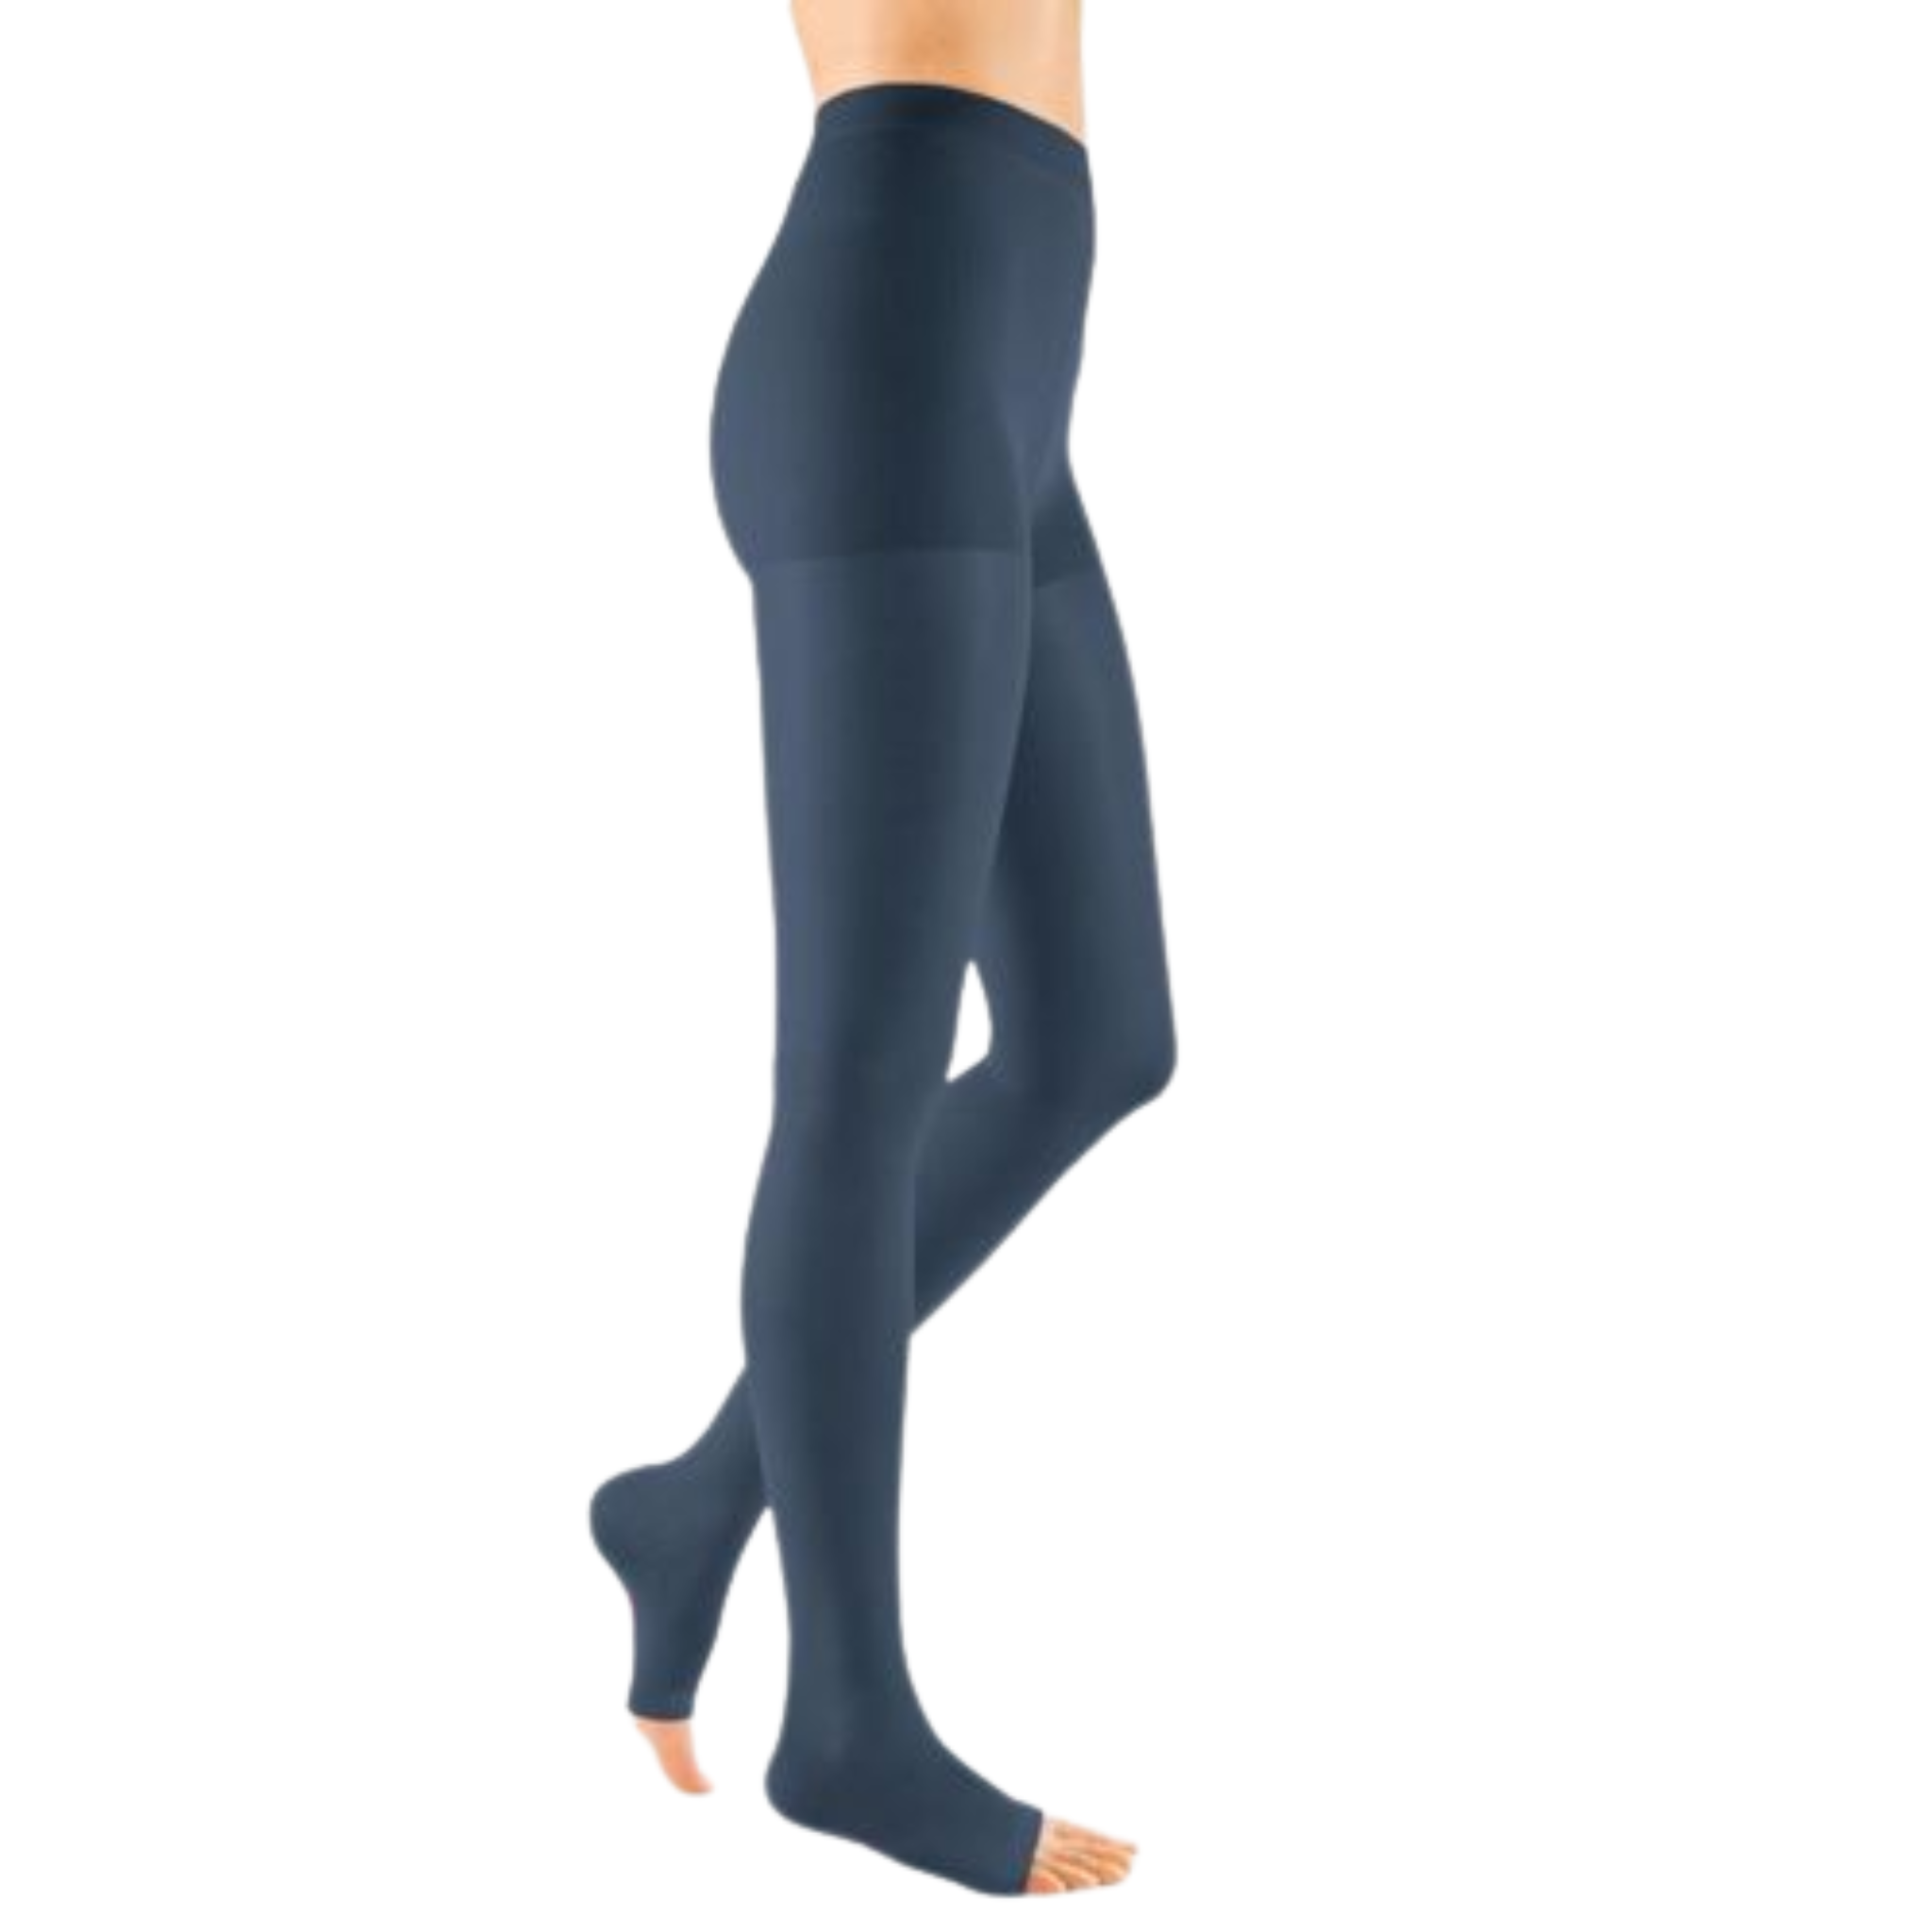 Compression Stockings  Pantyhose  Open Toe  Navy  mediven elegance®